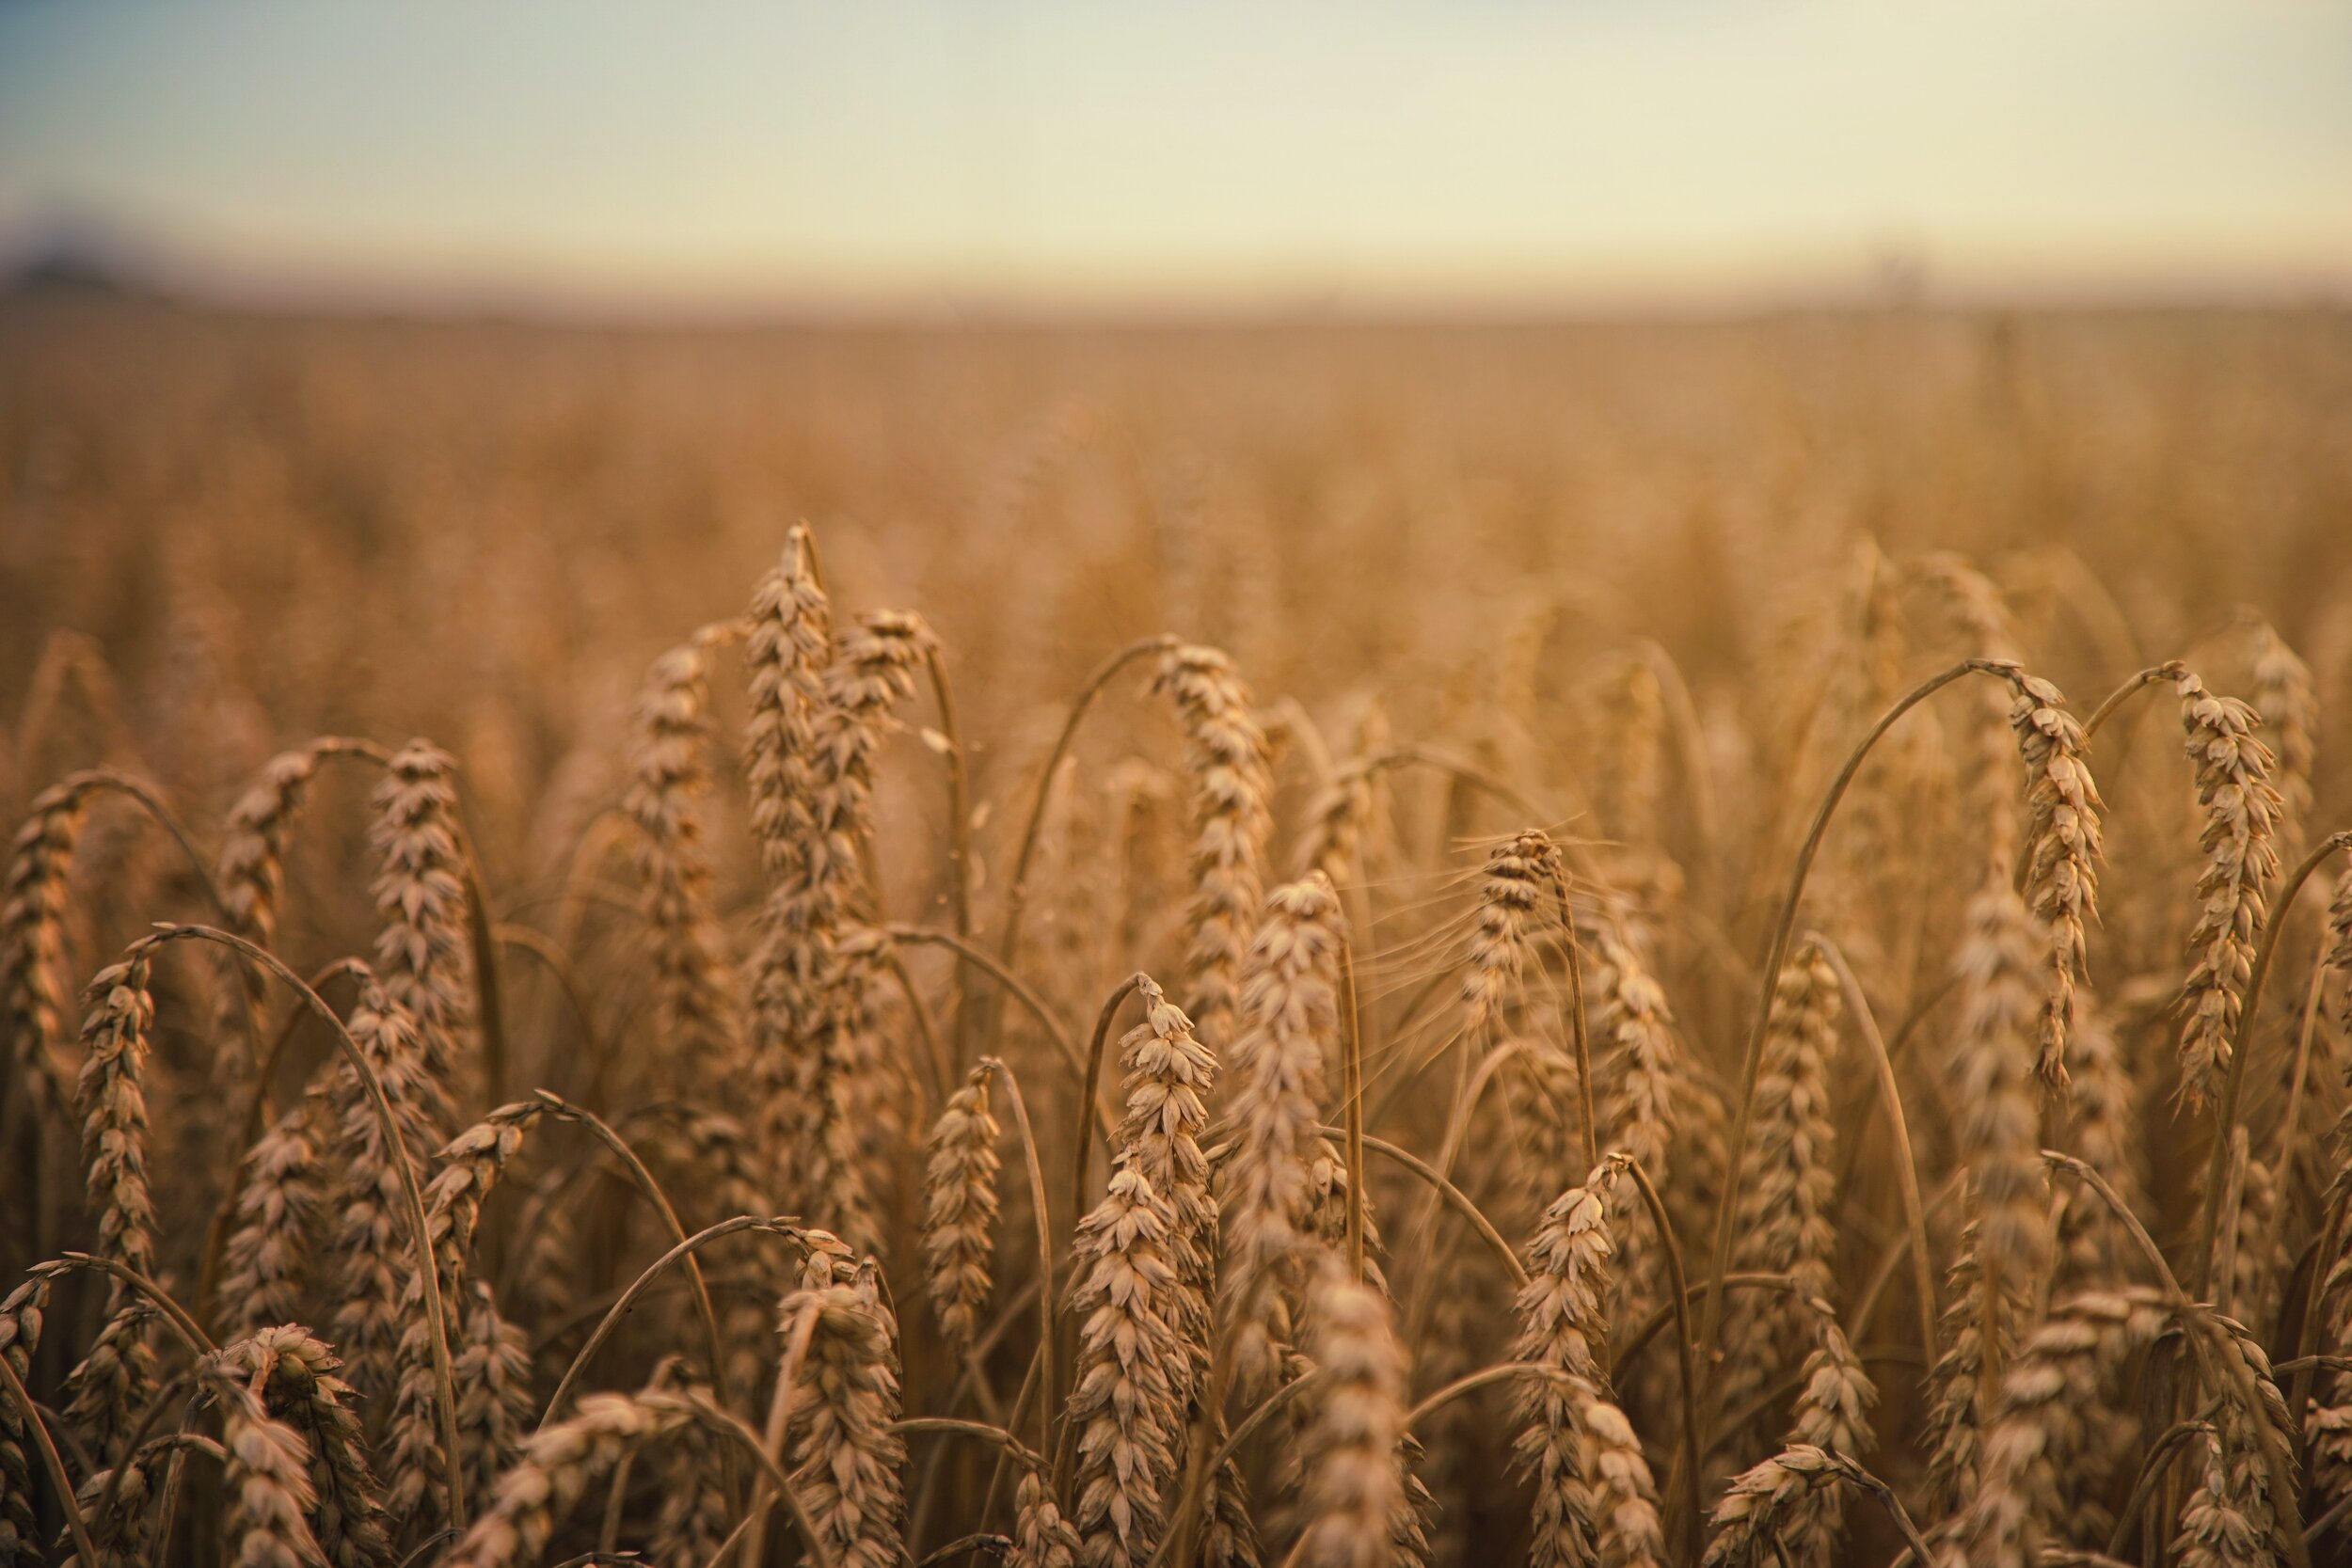 Image description: A field of golden wheat